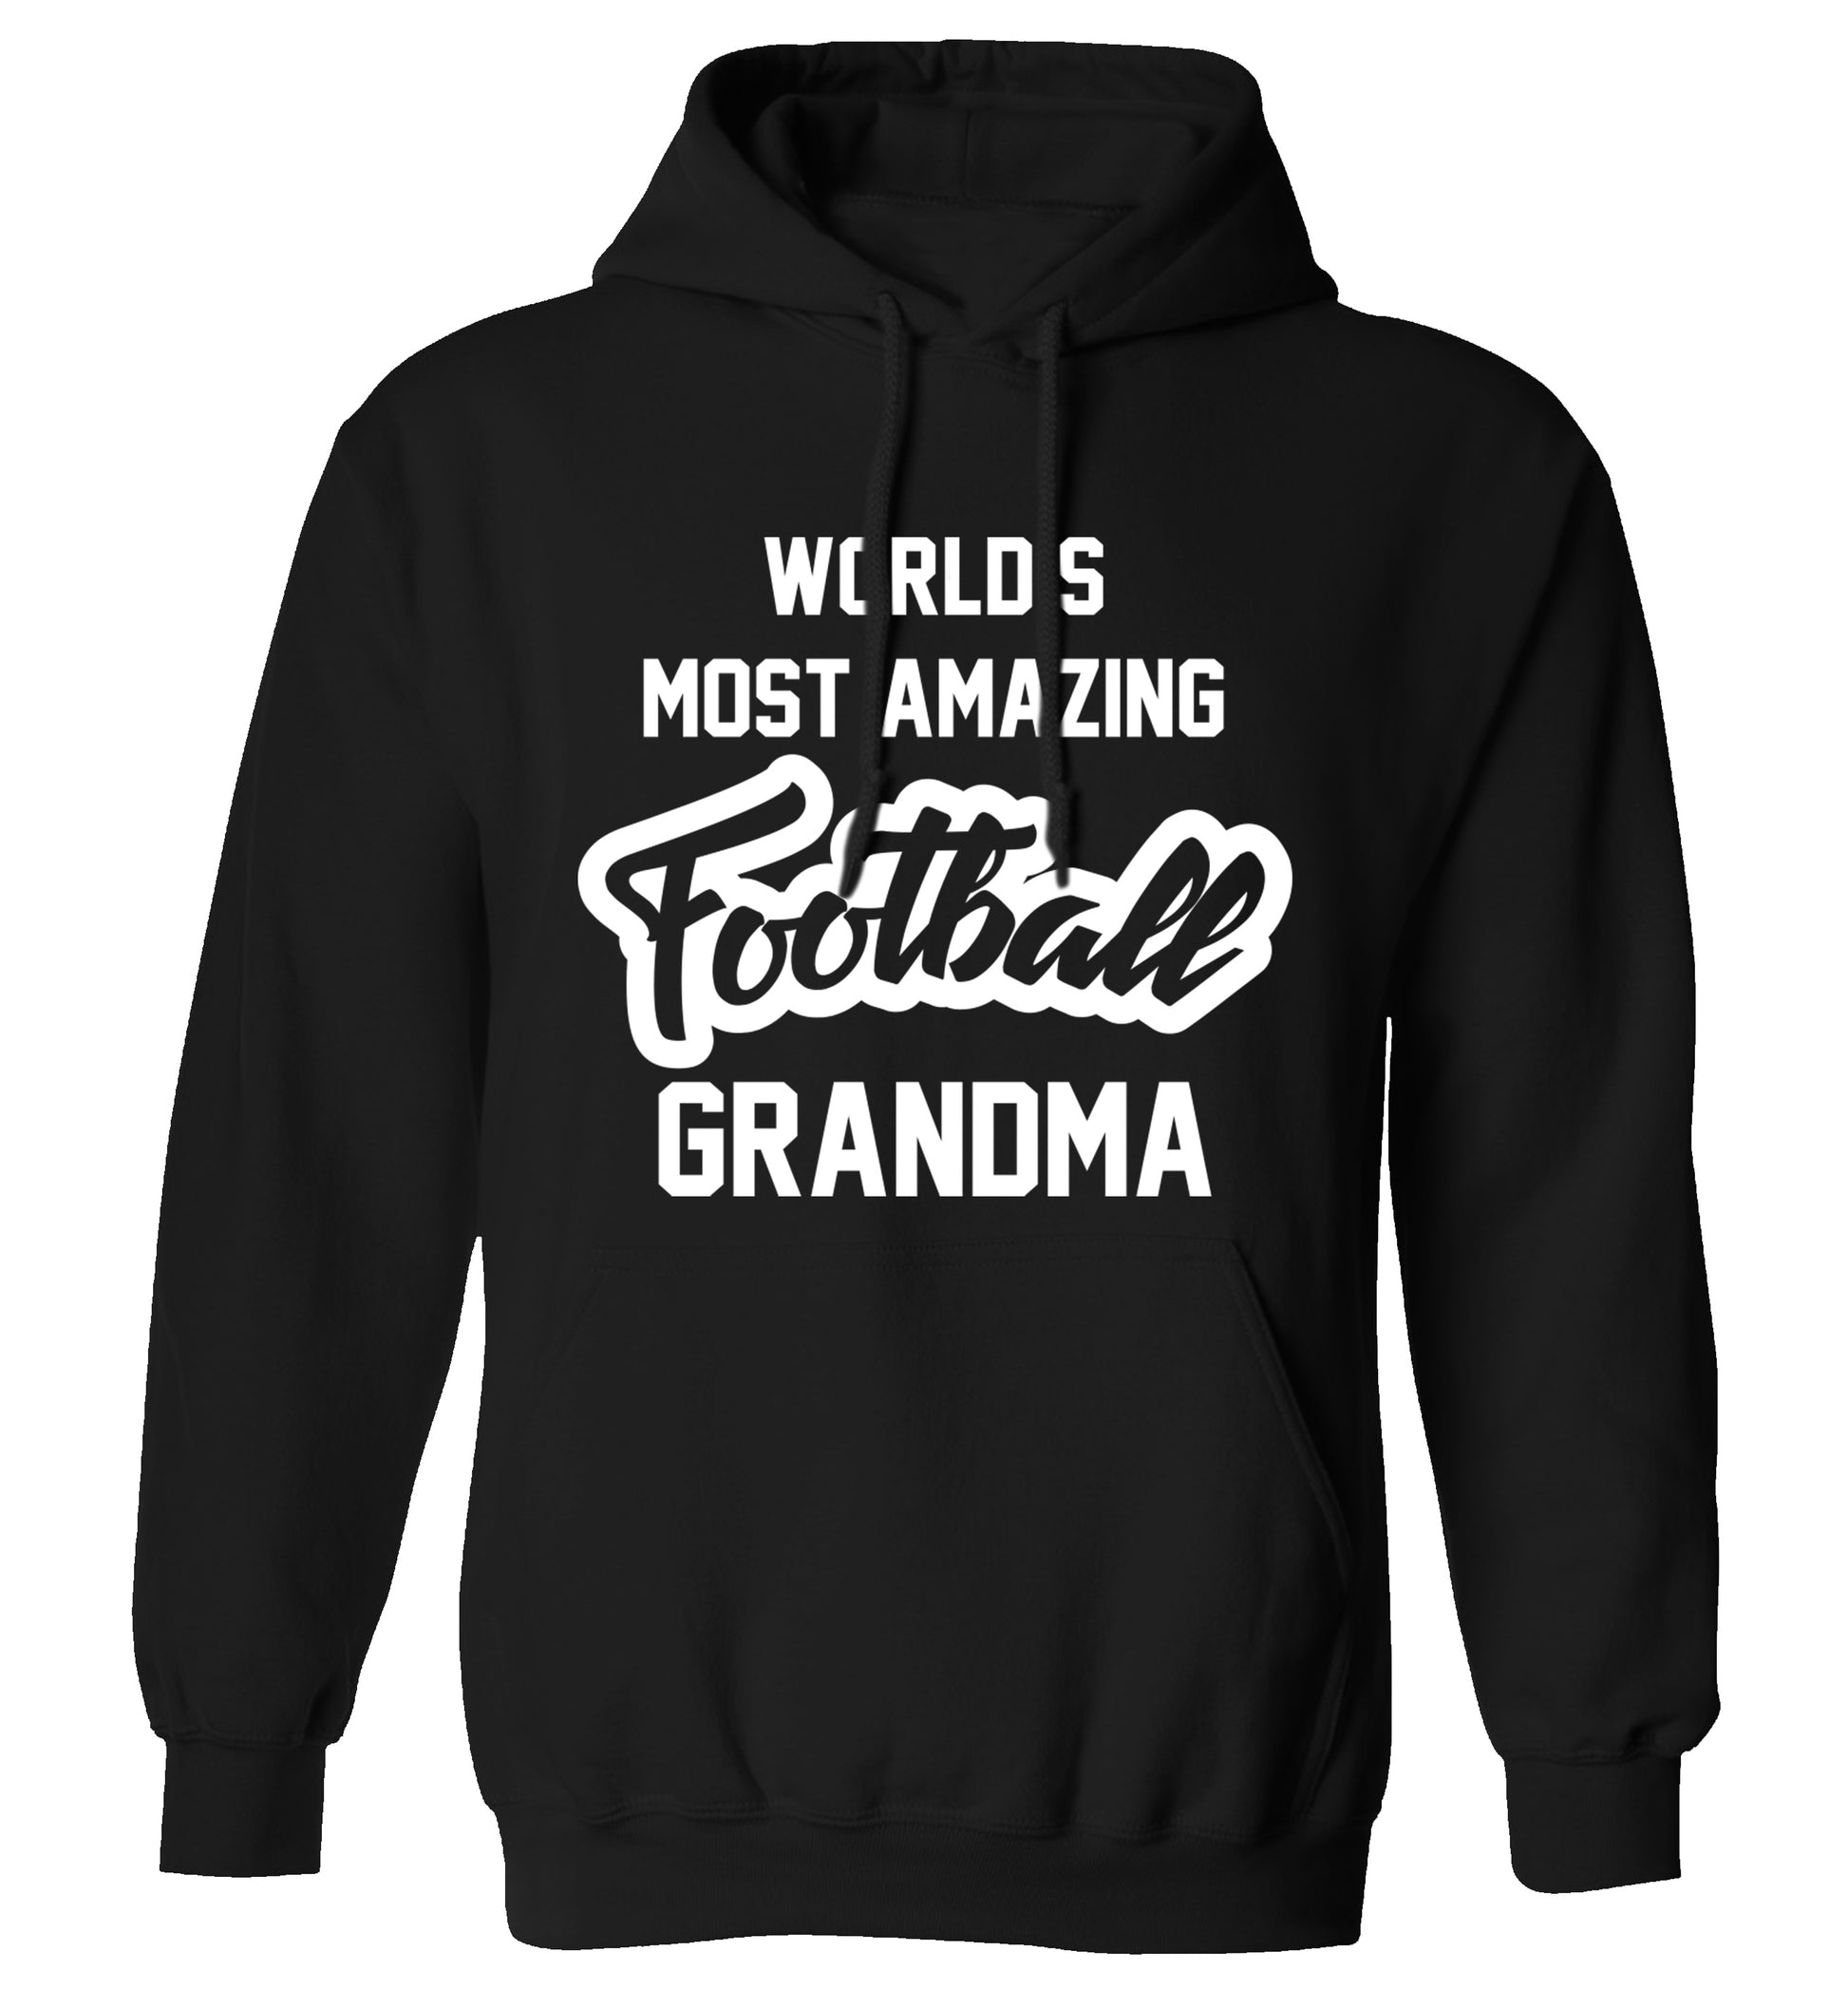 Worlds most amazing football grandma adults unisexblack hoodie 2XL